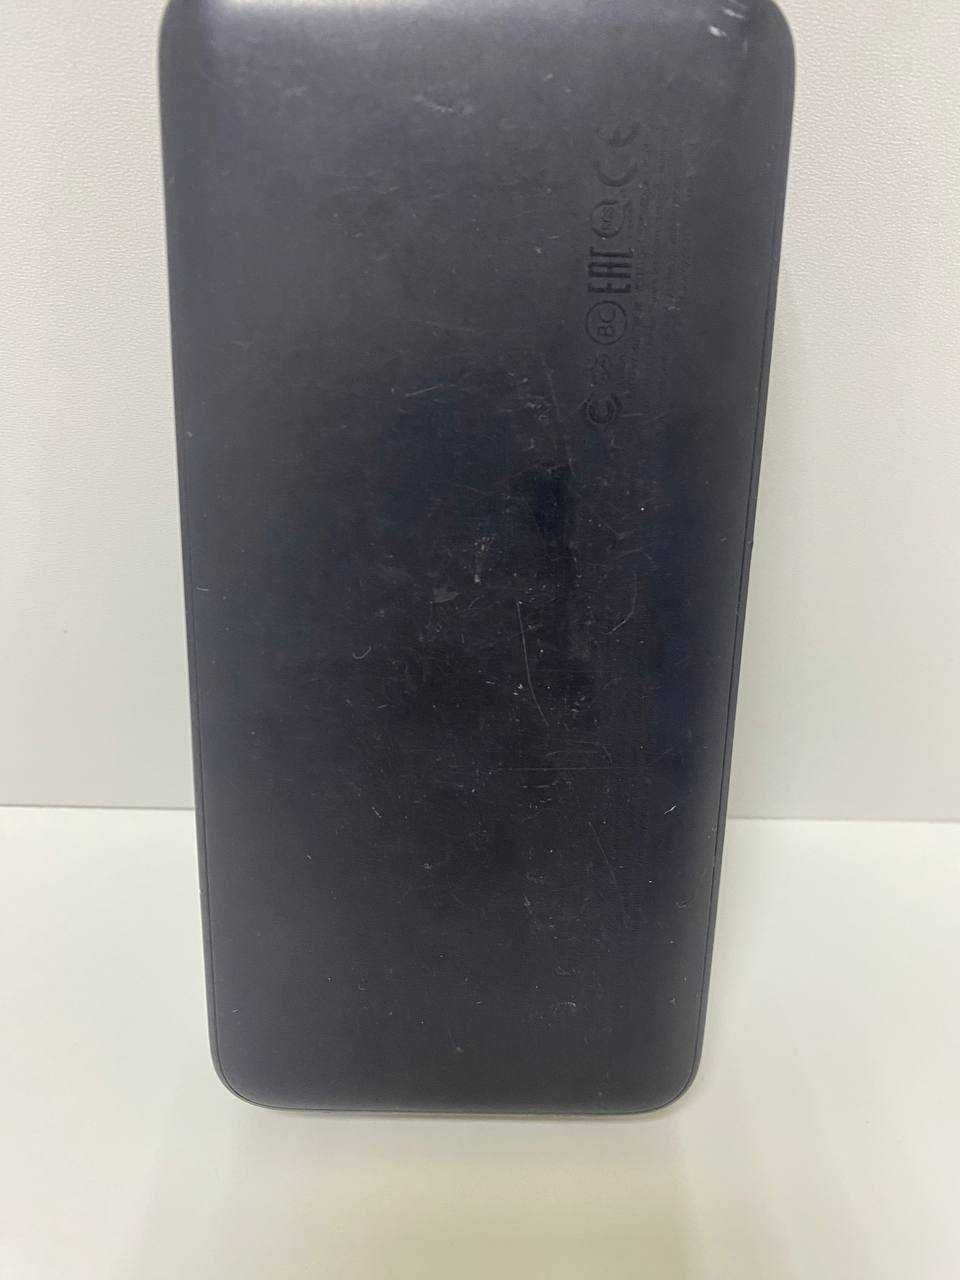 УМБ Xiaomi Redmi Power Bank 20000 mAh Black